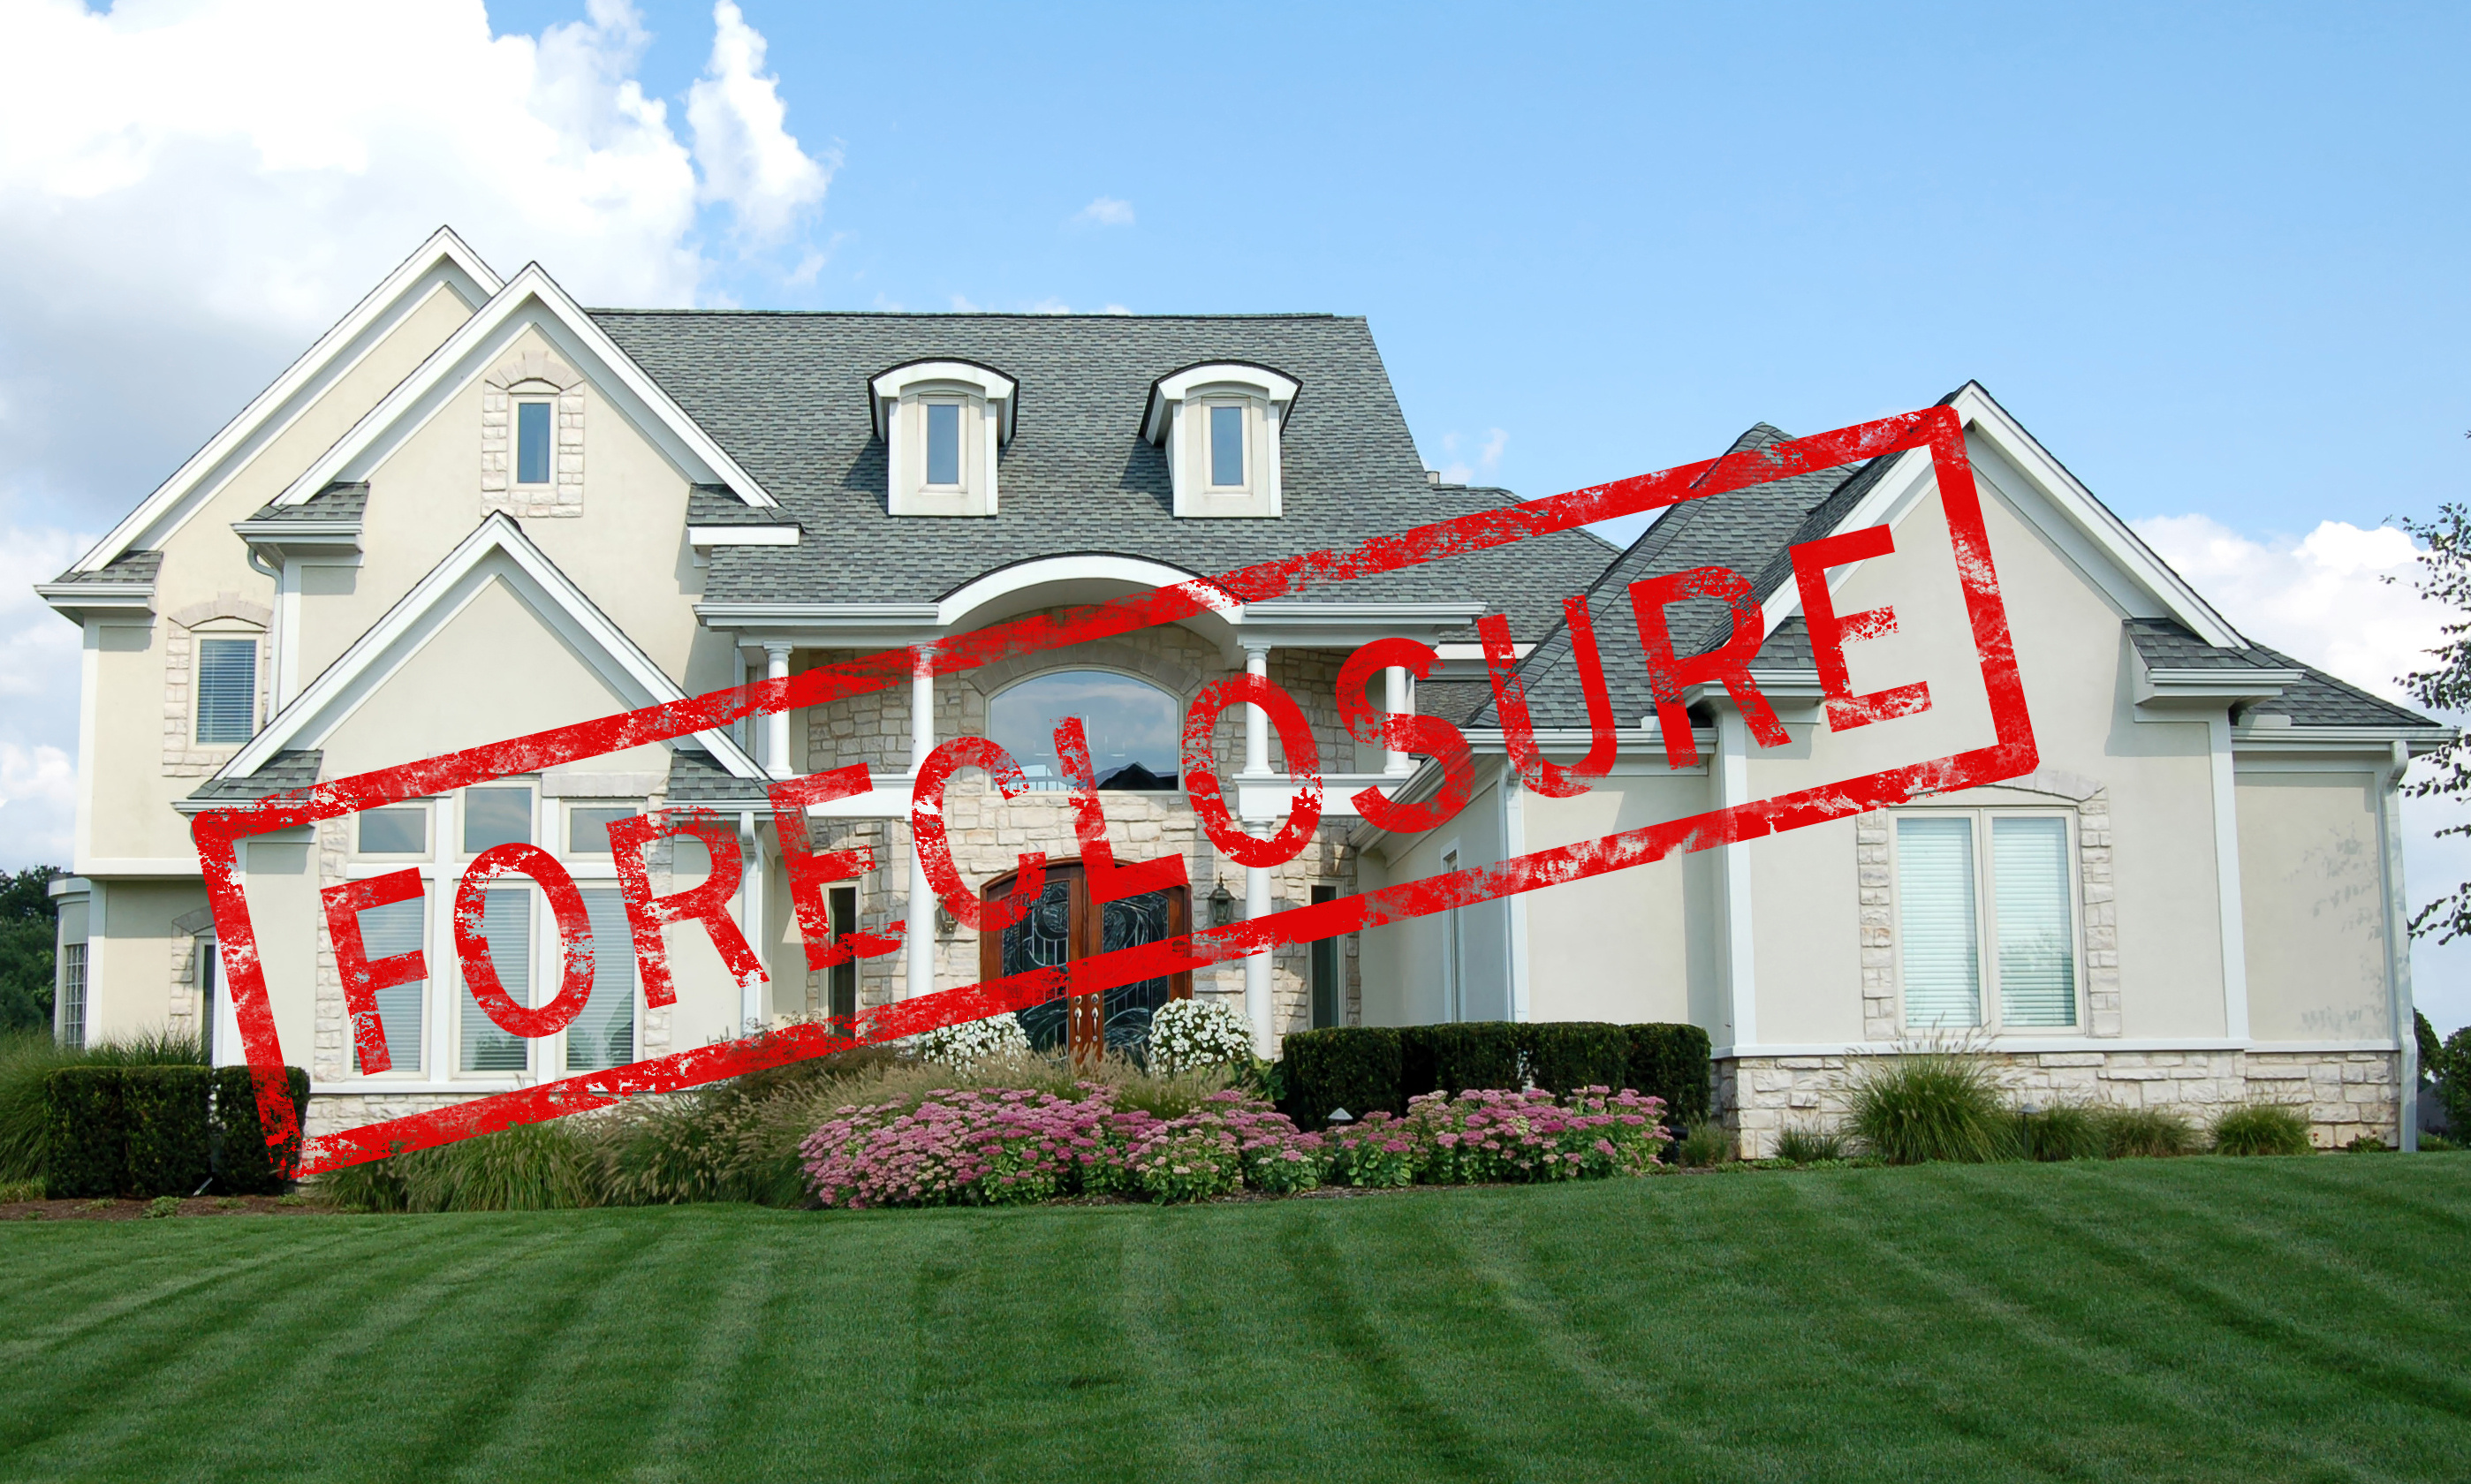 Call Tri-County Appraisals to discuss valuations regarding Larimer foreclosures